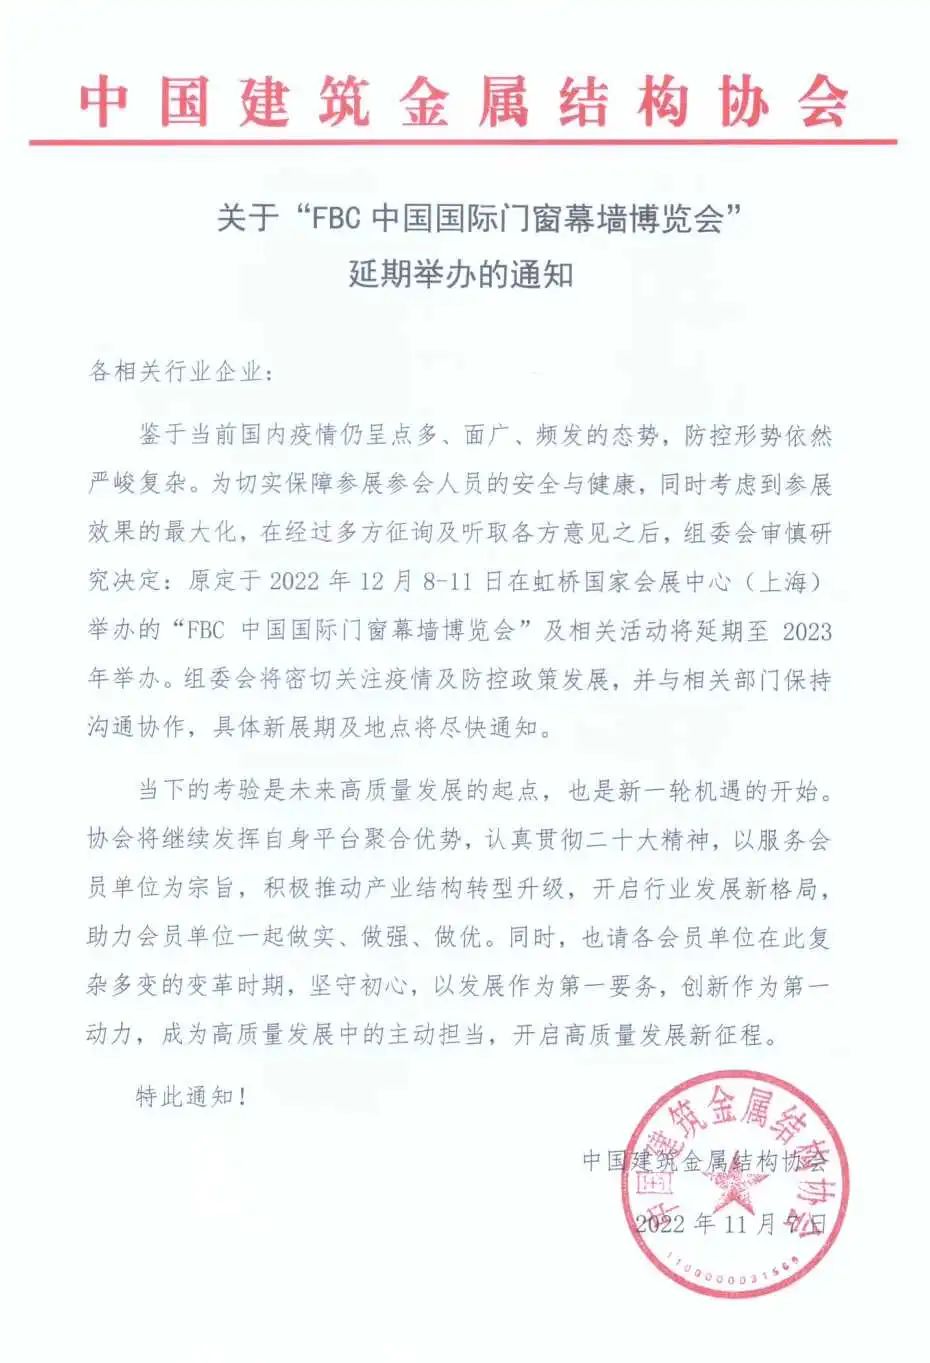 FBC中国门窗幕墙博览会延期举办